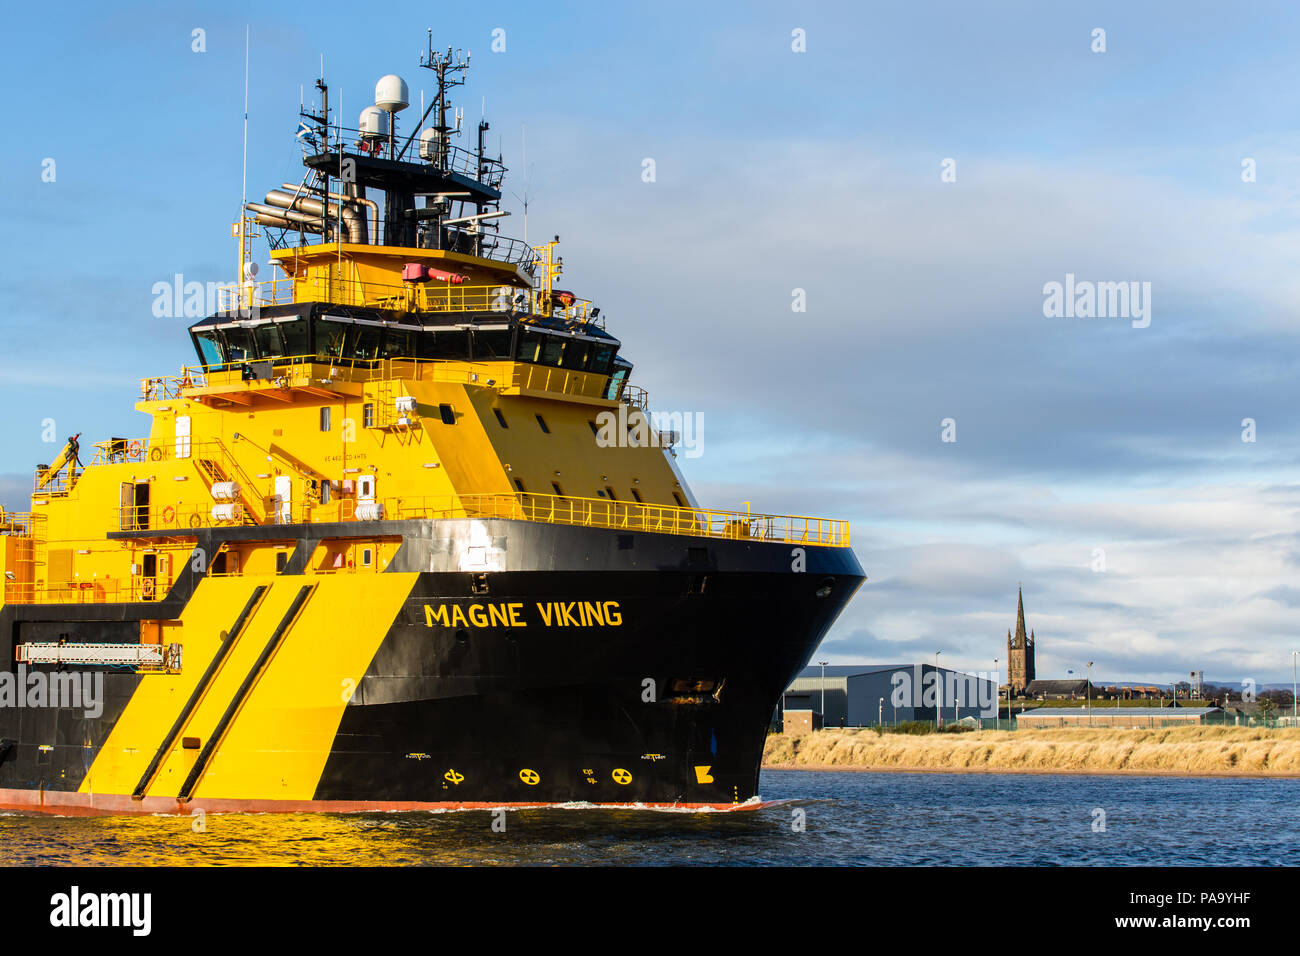 Magne Viking oil rig supply ship Stock Photo